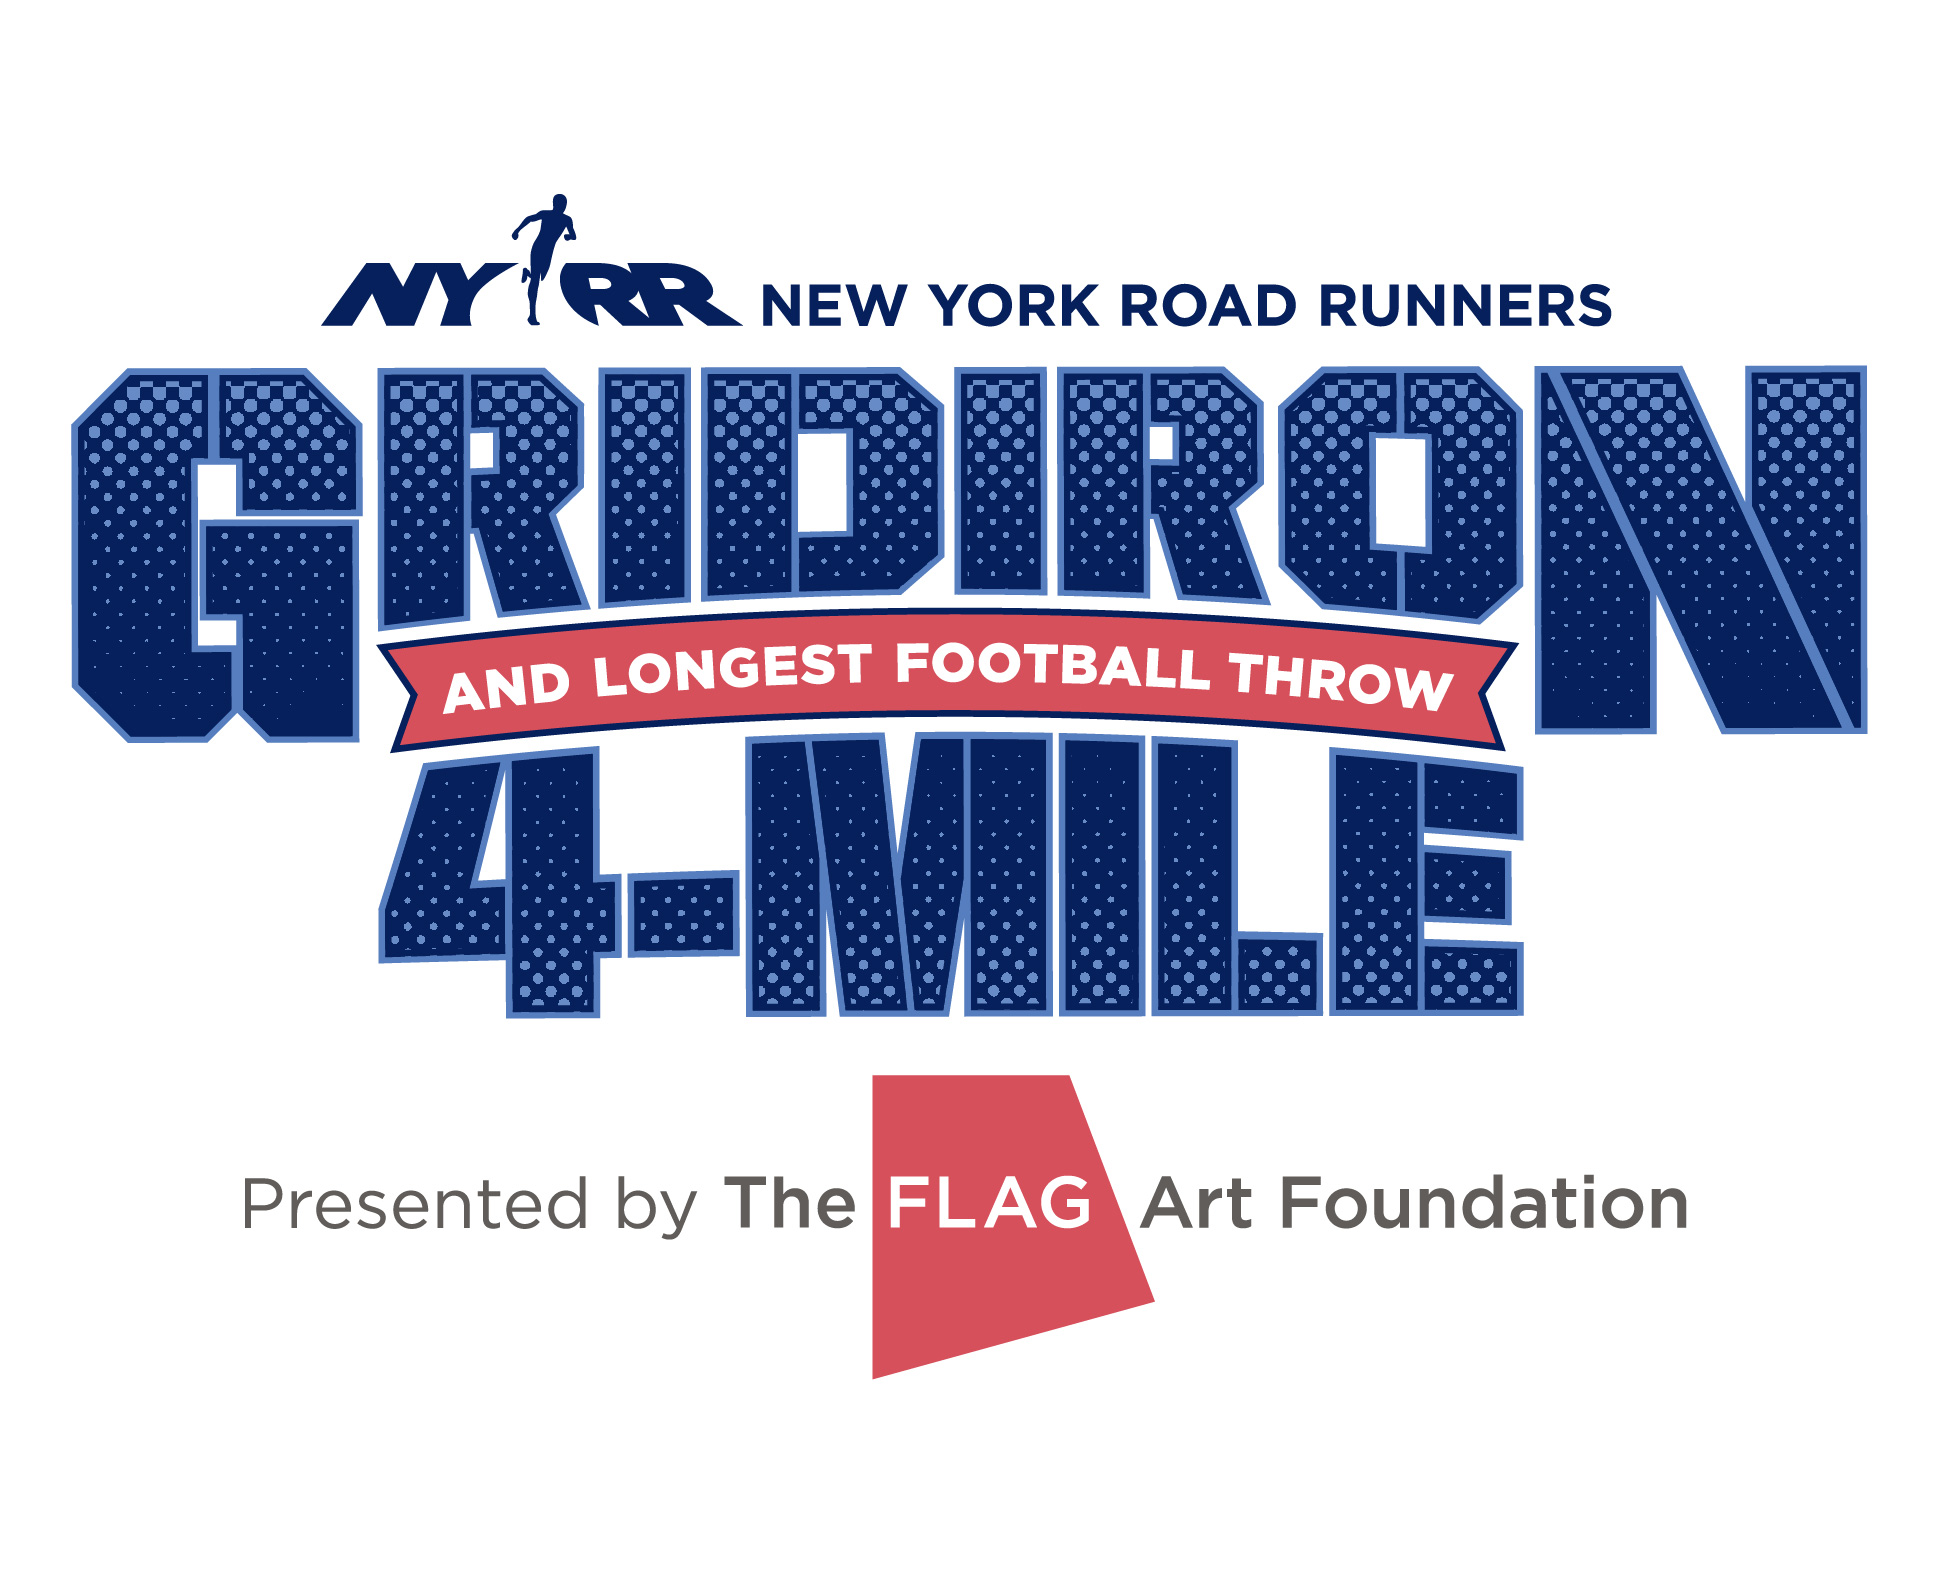 NYRR Gridiron presented by FLAG Arts Foundation